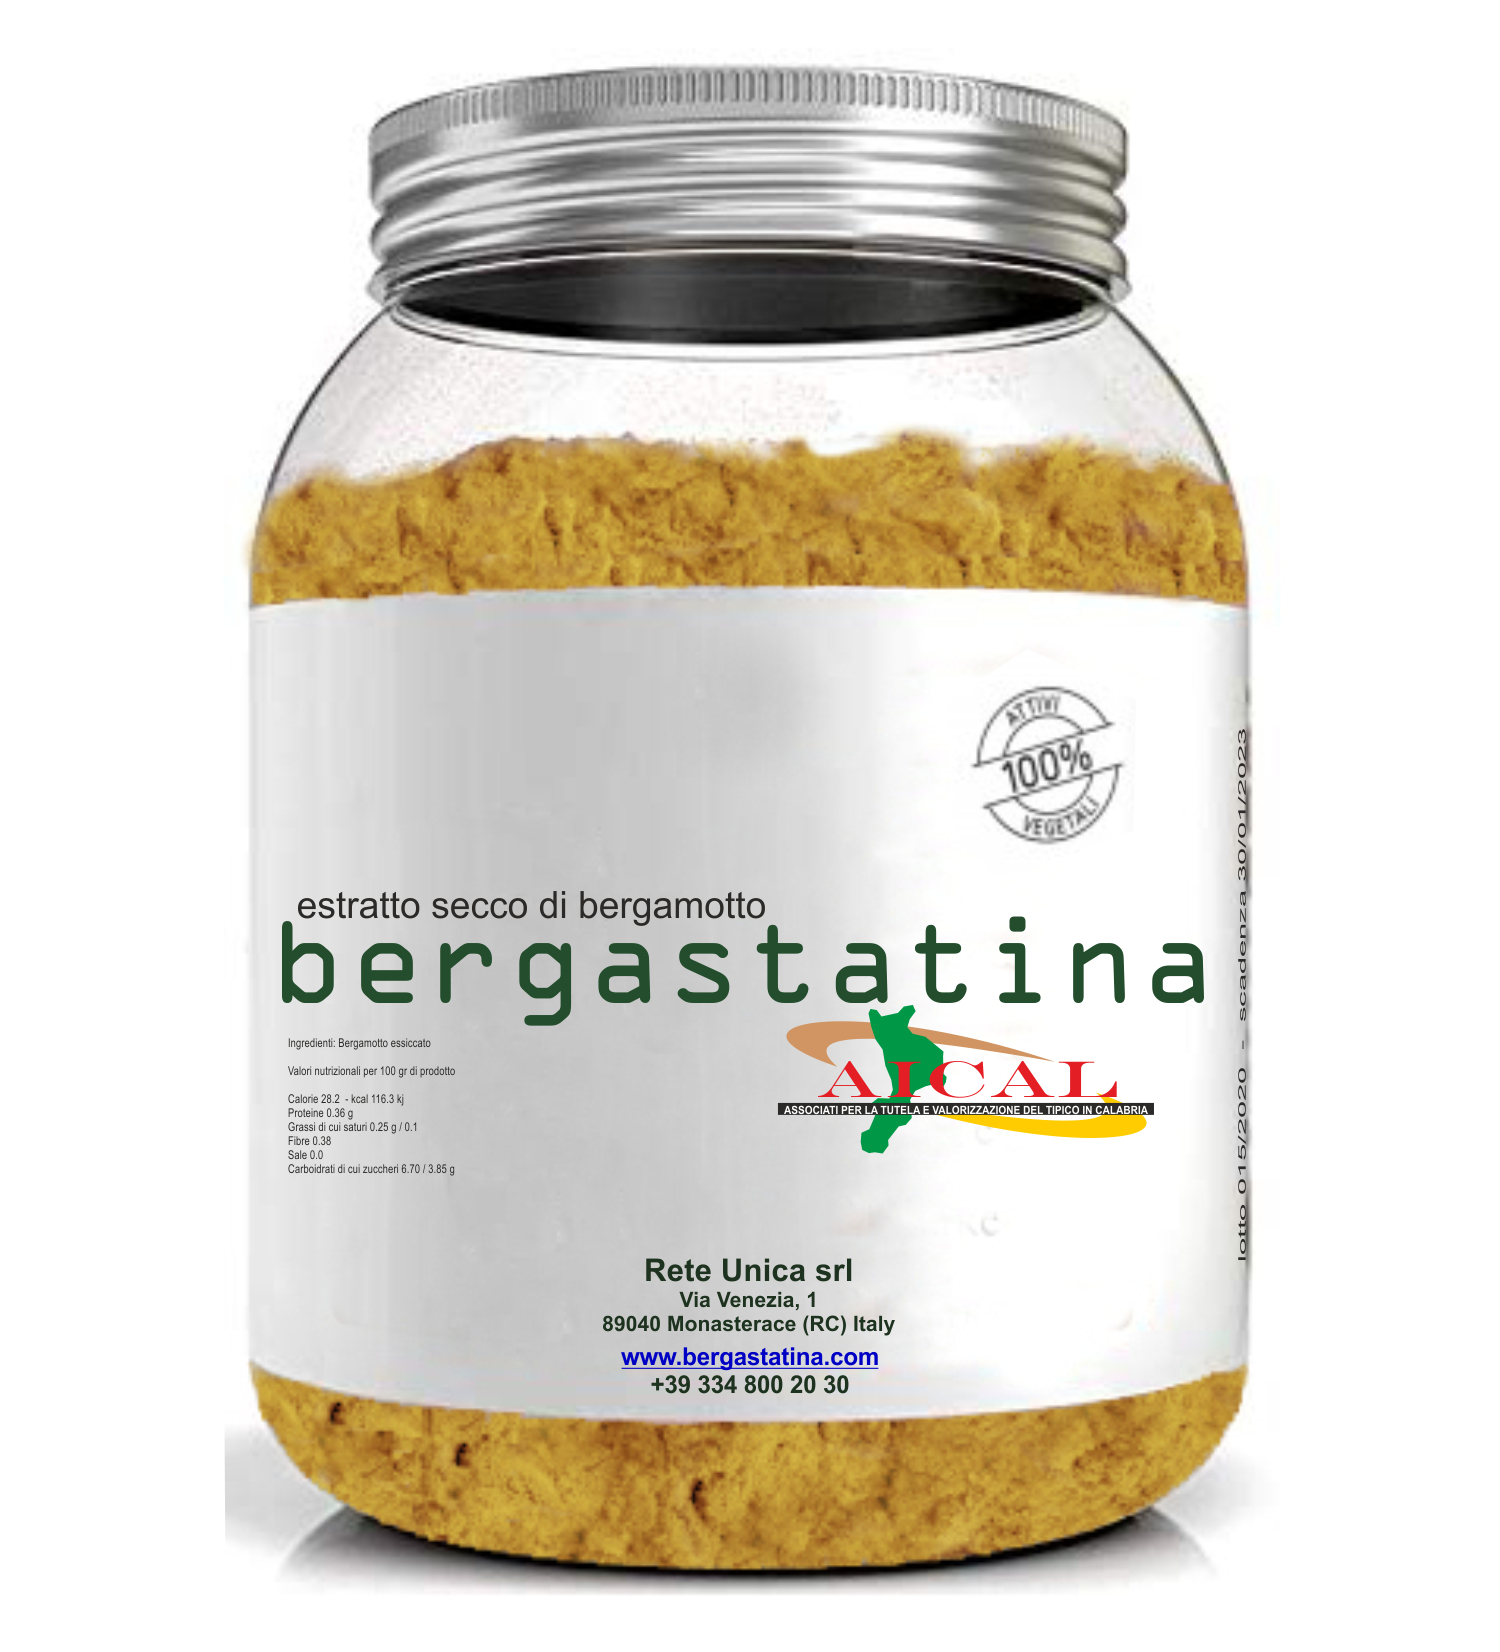 Bergastatina, bergamot powder for pharmaceutical applications